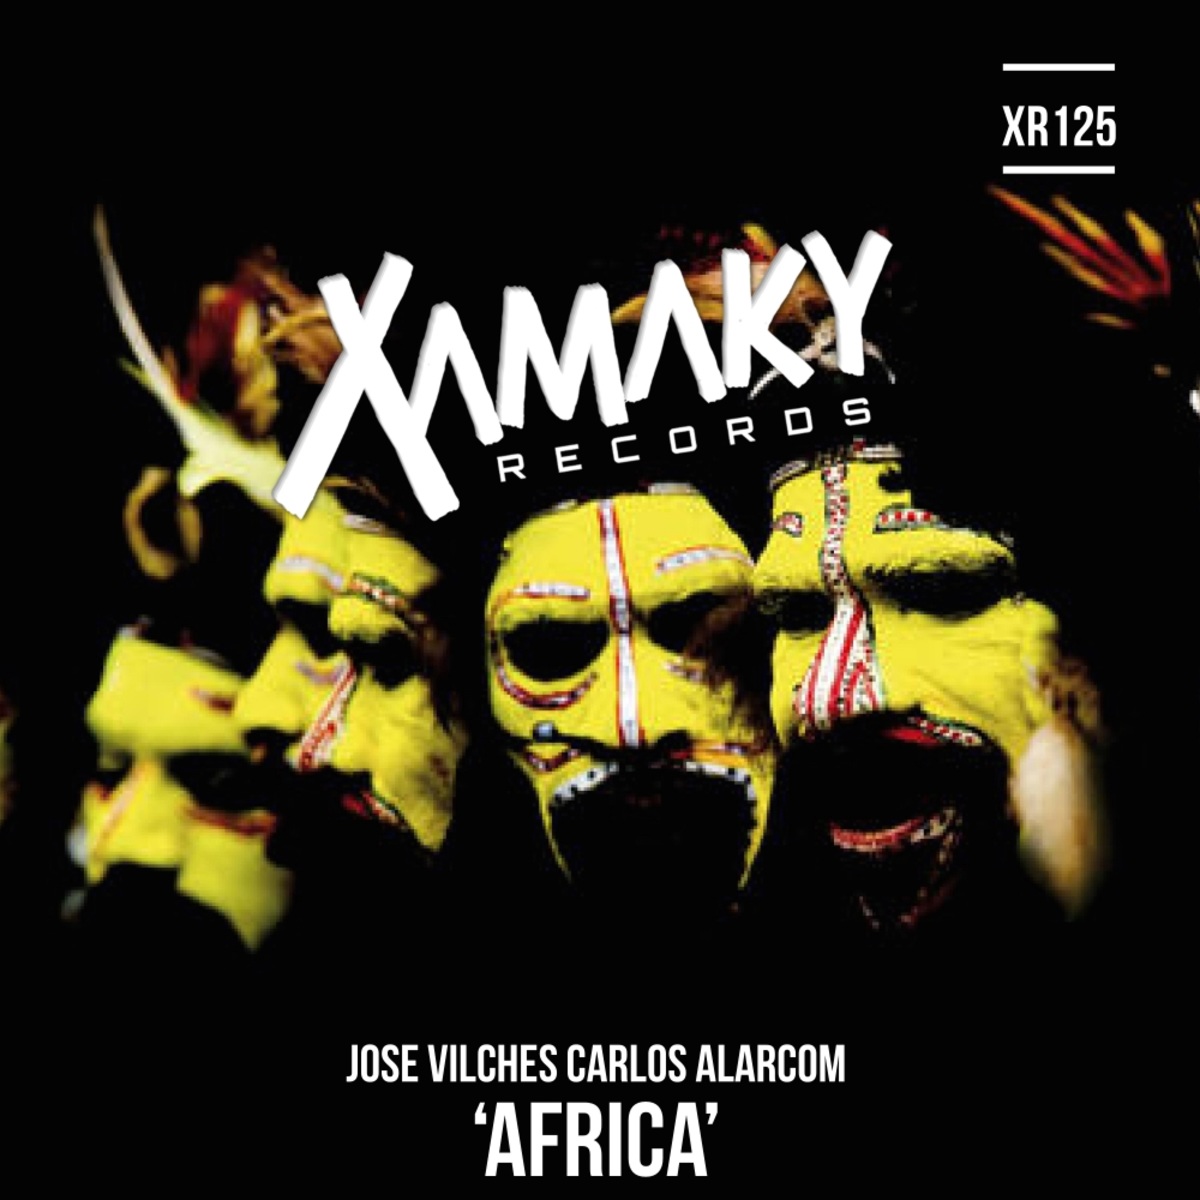 Jose Vilches & Carlos Alarcom - Africa / Xamaky Records